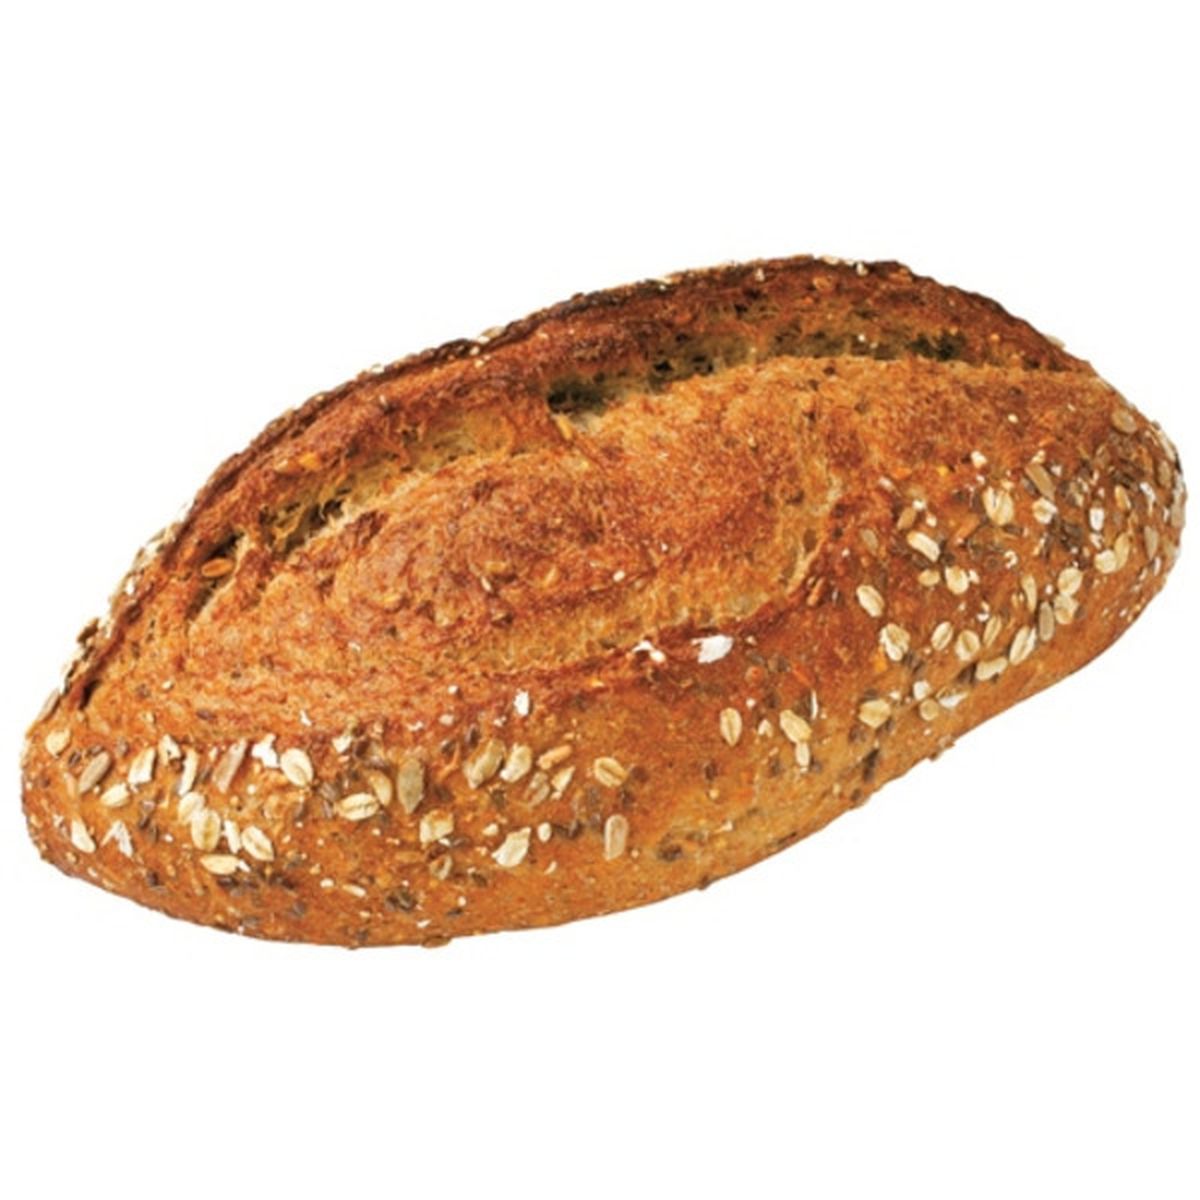 Calories in Wegmans Seven Grain Loaf